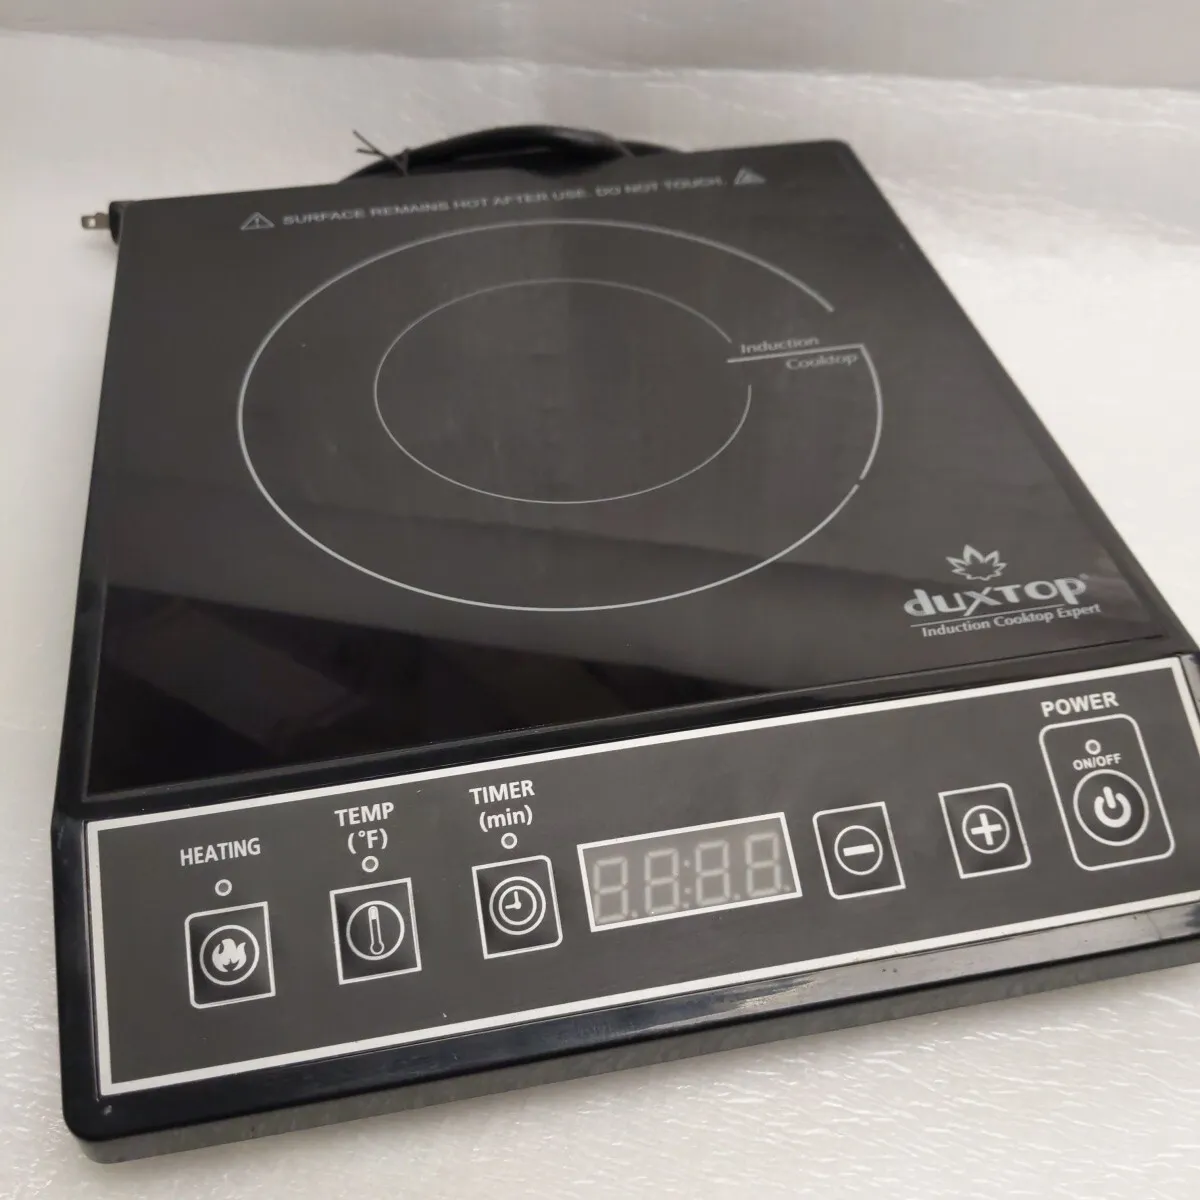 Mueller RapidTherm Portable Induction Cooktop Hot Plate Countertop Burner  1800W 